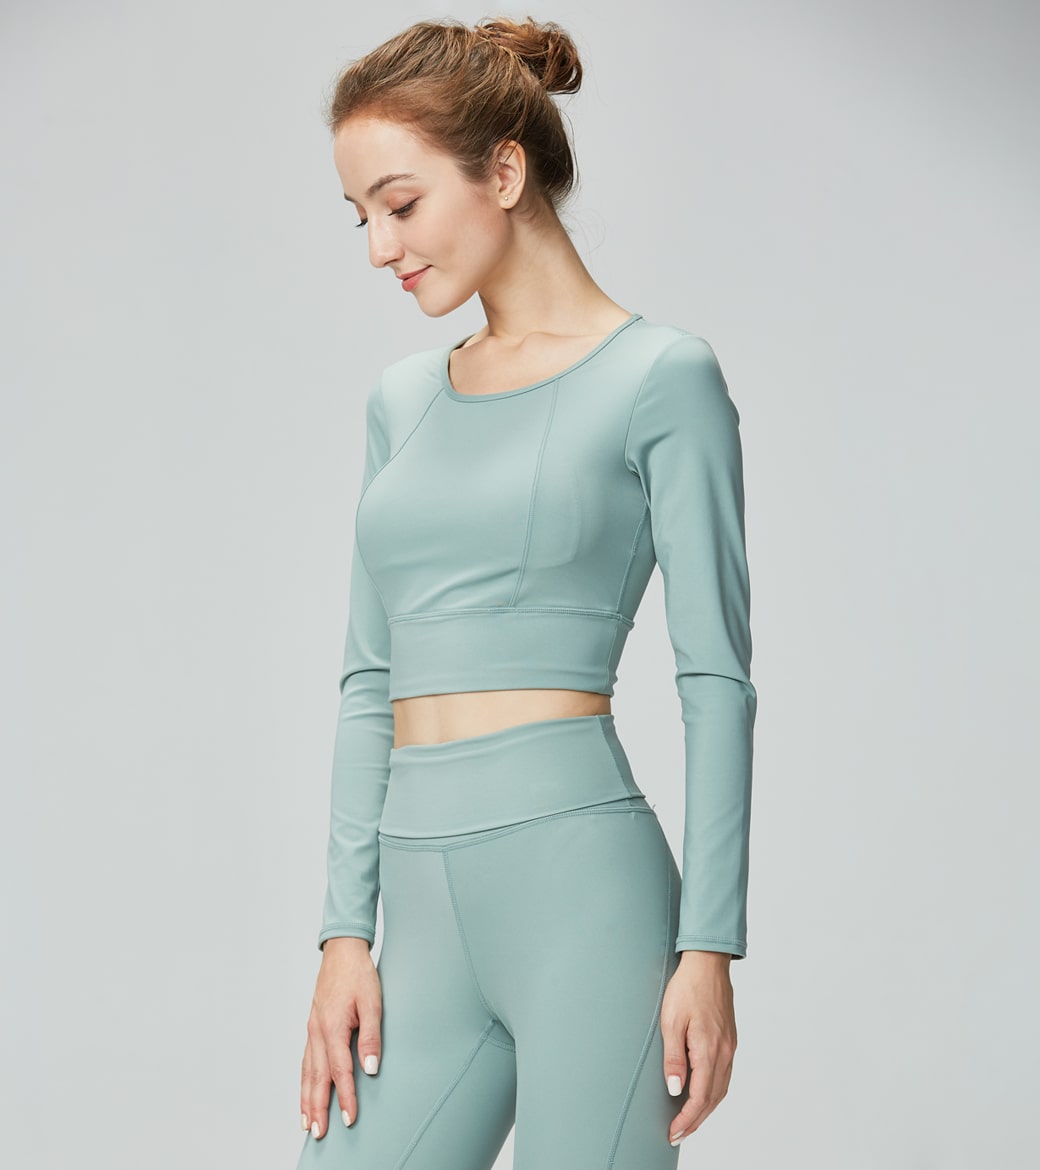 LOVESOFT Women Yoga Casual Slim Fit Long Sleeve Shirts-Light Green